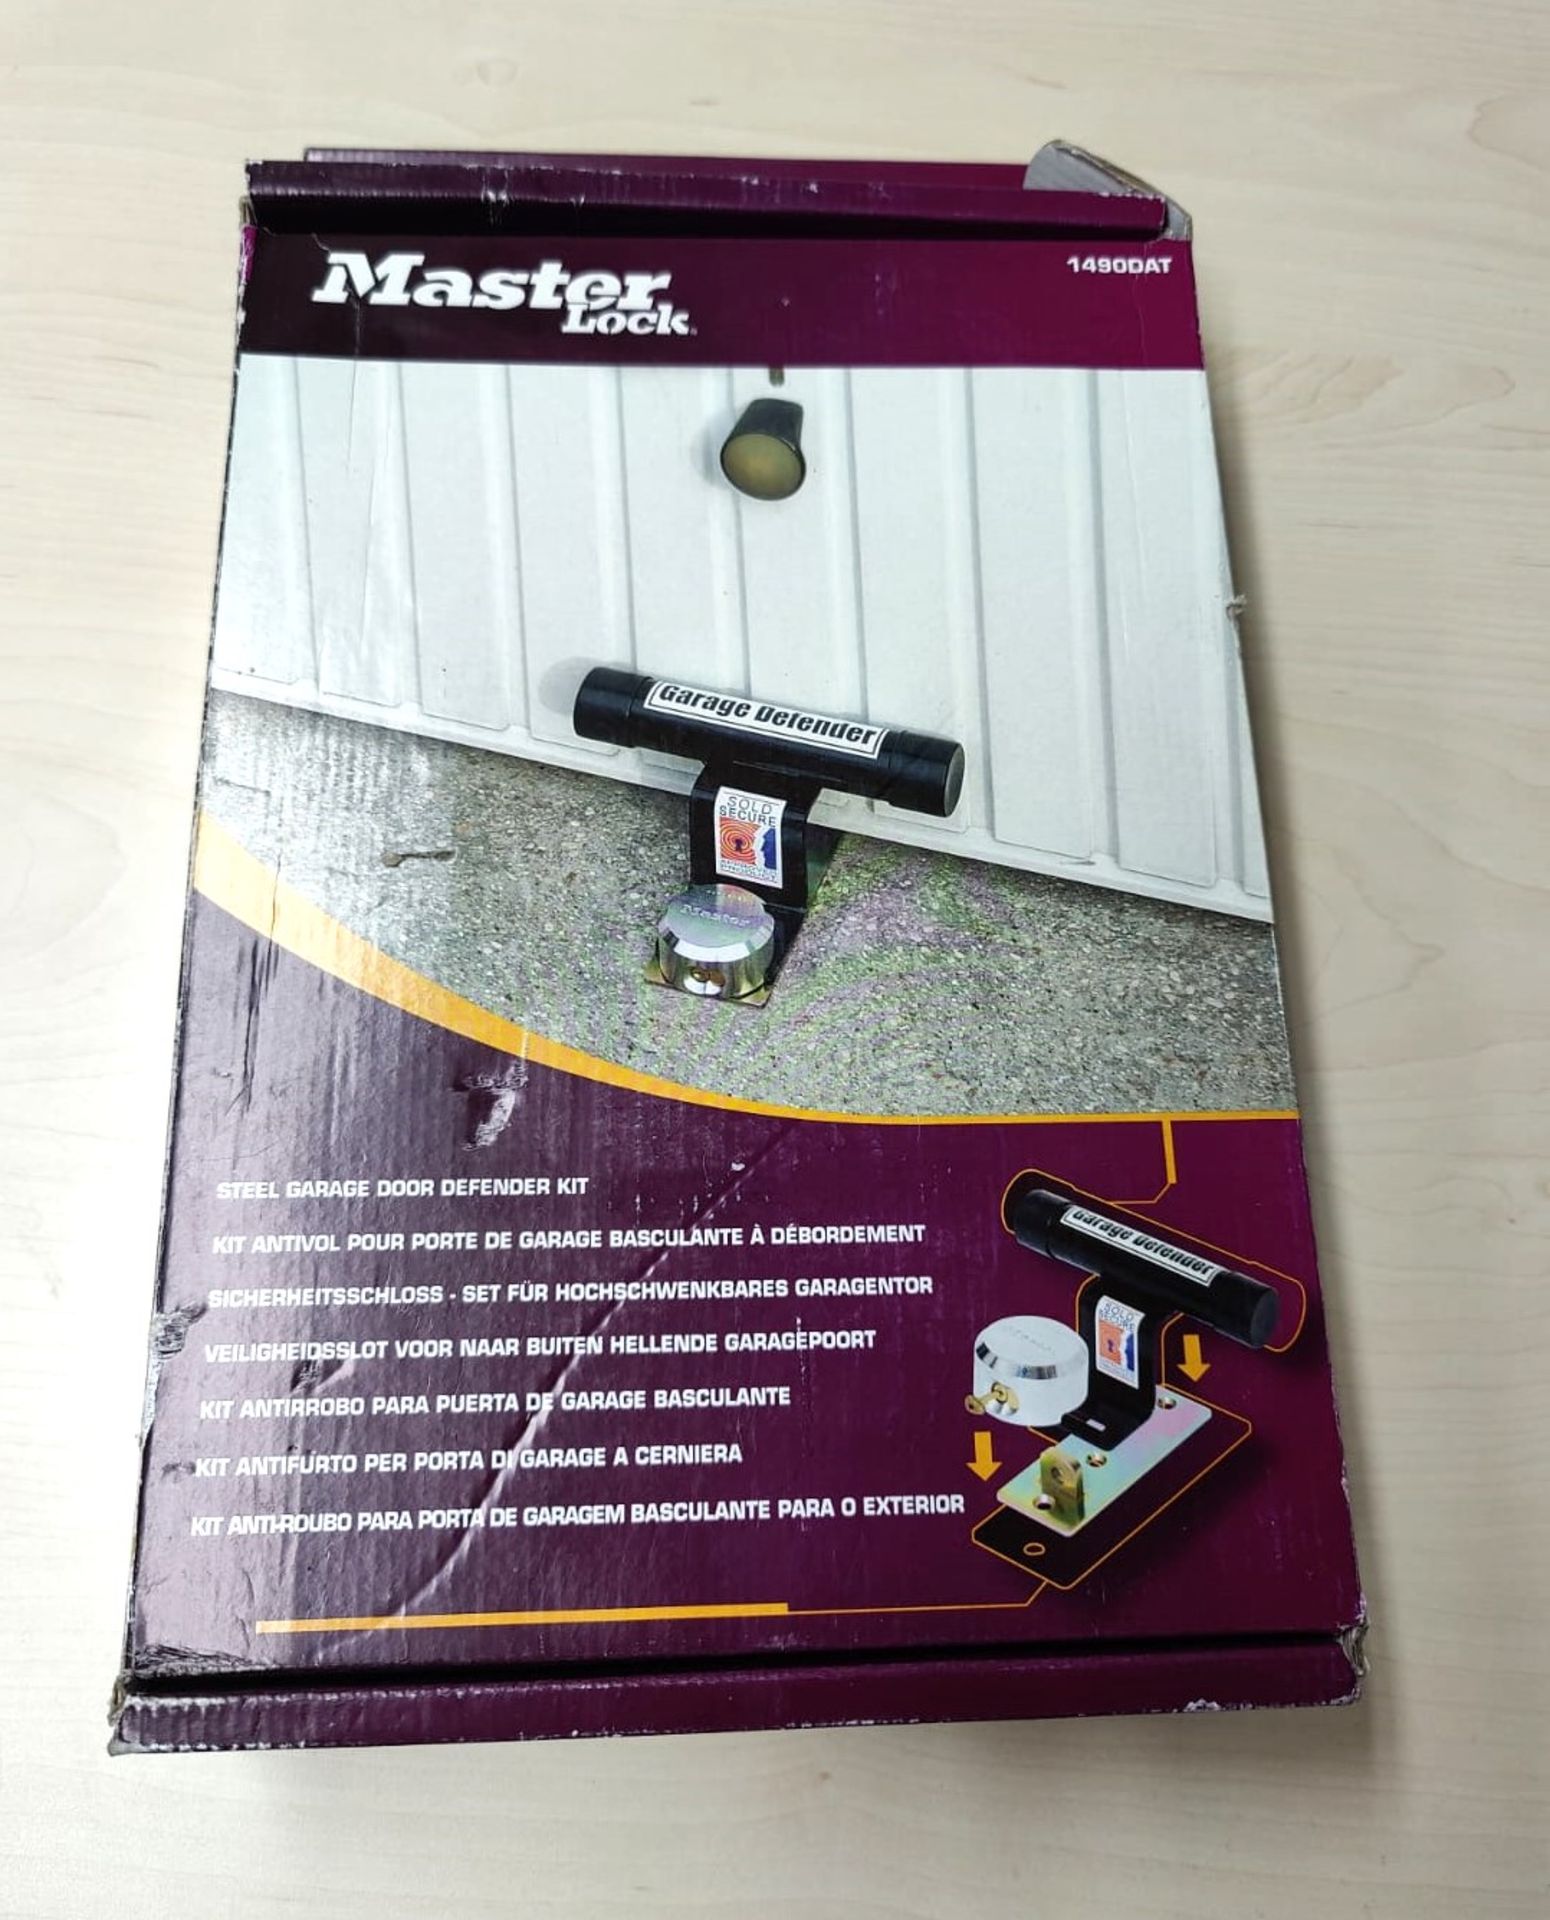 1 x Master Lock Steel Garage Door Defender Kit - Unused - Boxed With Accessories - CL011 - Location: